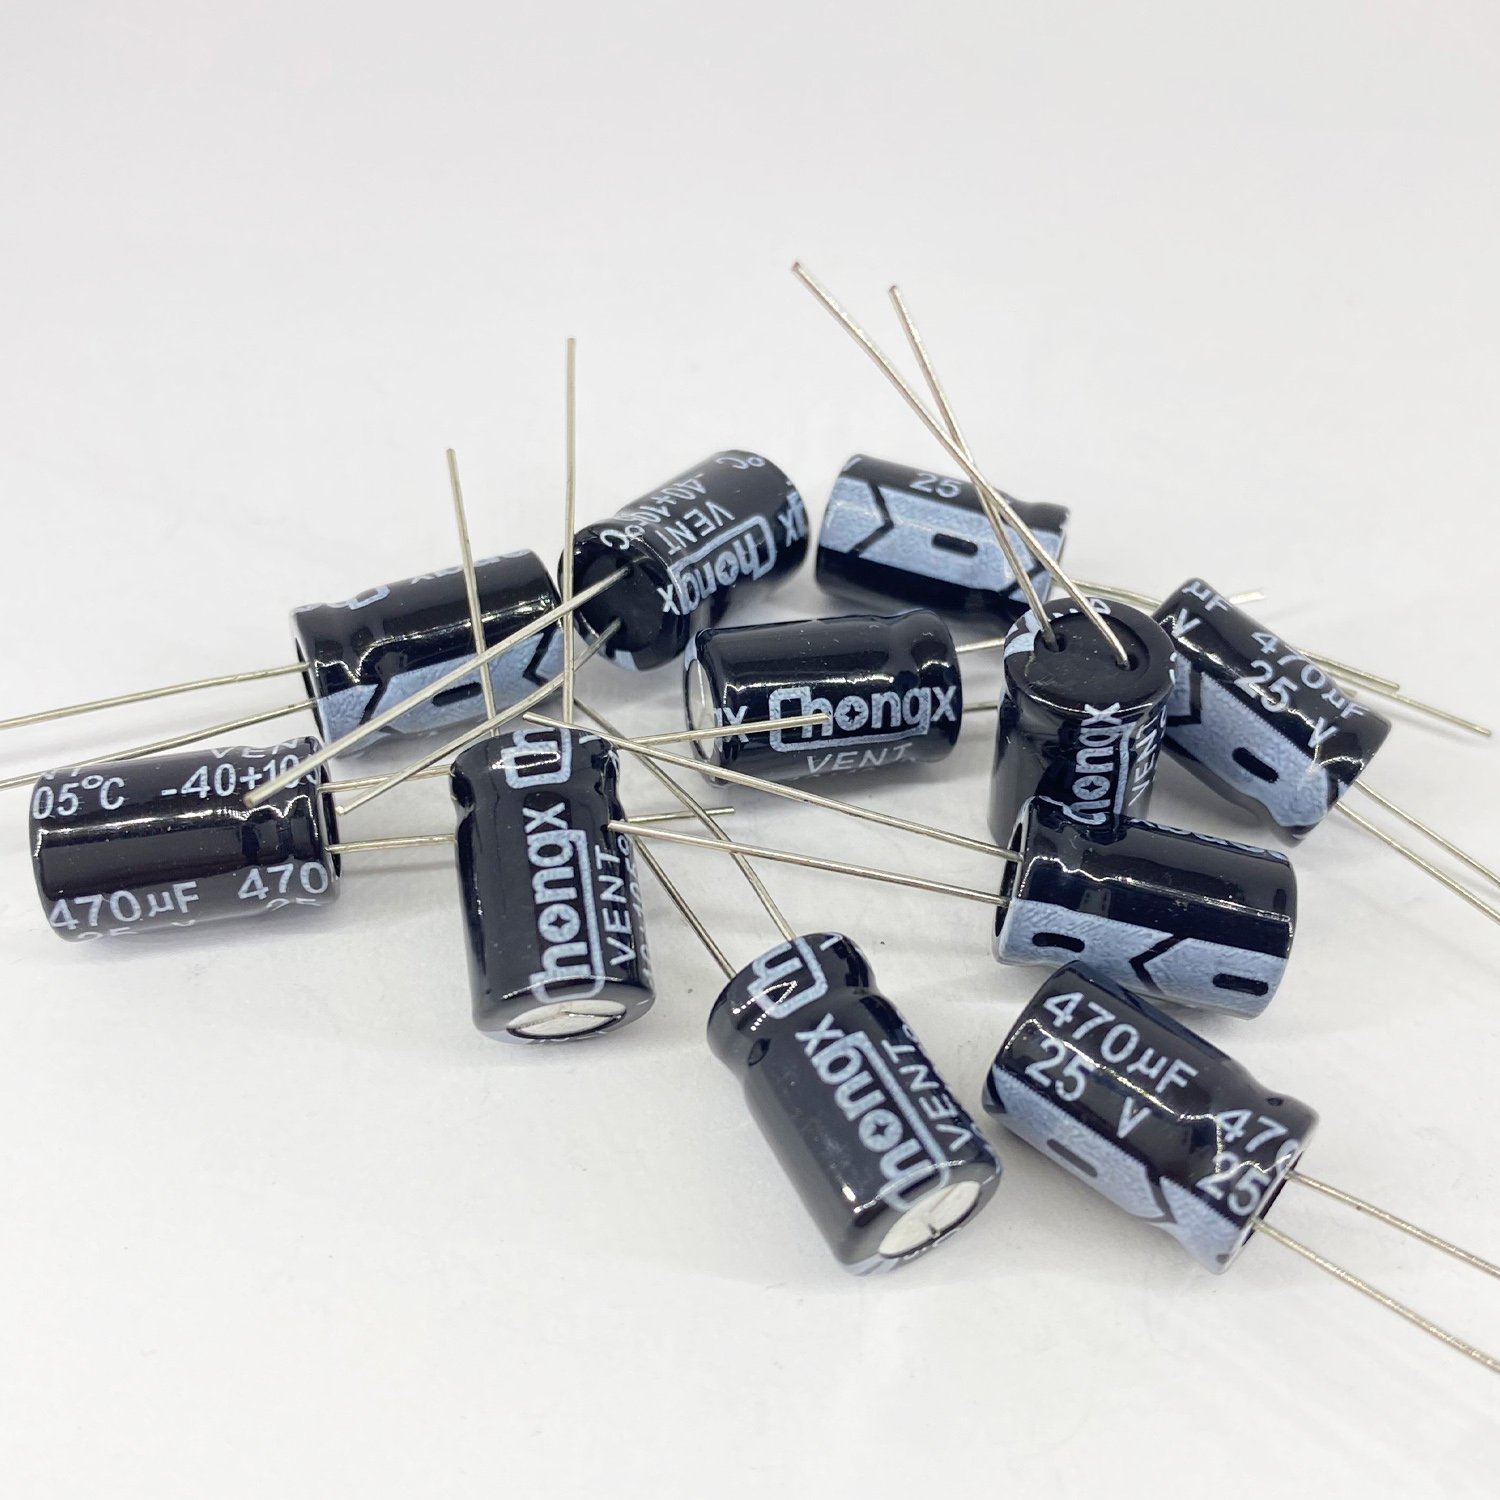 Электролитические конденсаторы 470 мкф x 25 В - 12x8 мм 105 °C ChongX, фото